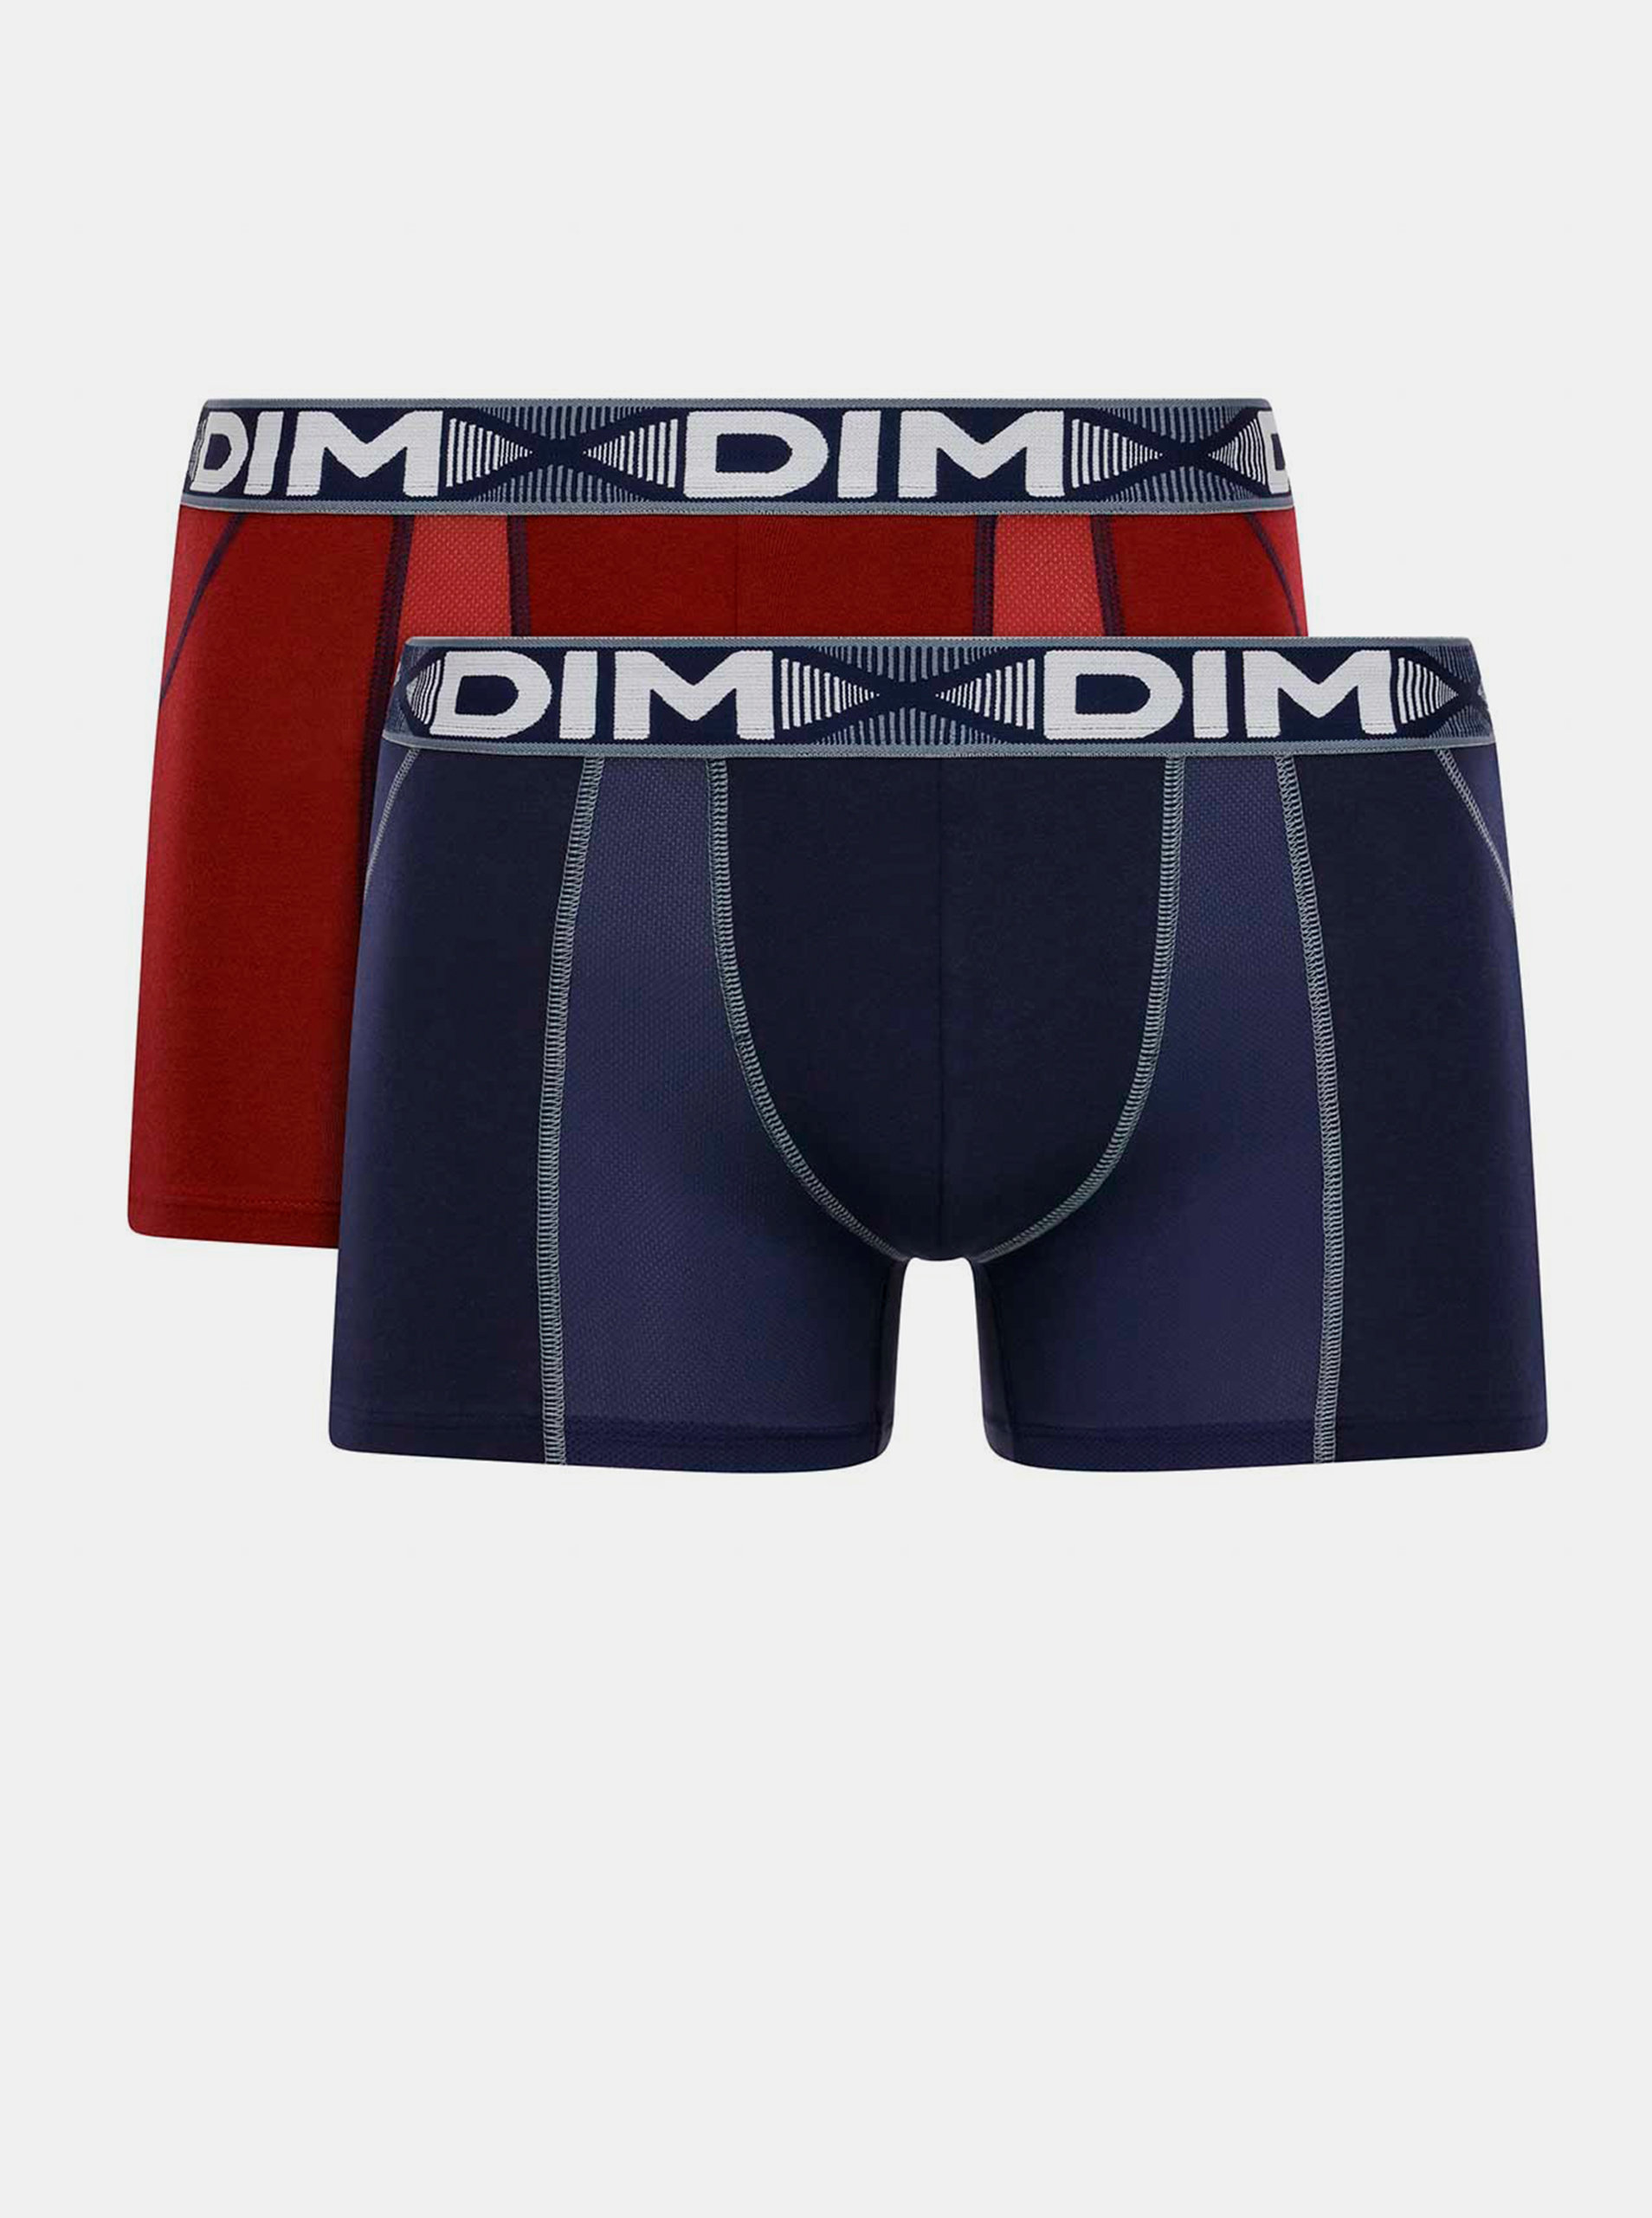 Fotografie DIM COTTON 3D FLEX AIR BOXER 2x - Pánské boxerky 2ks - tmavě červená - tmavě modrá